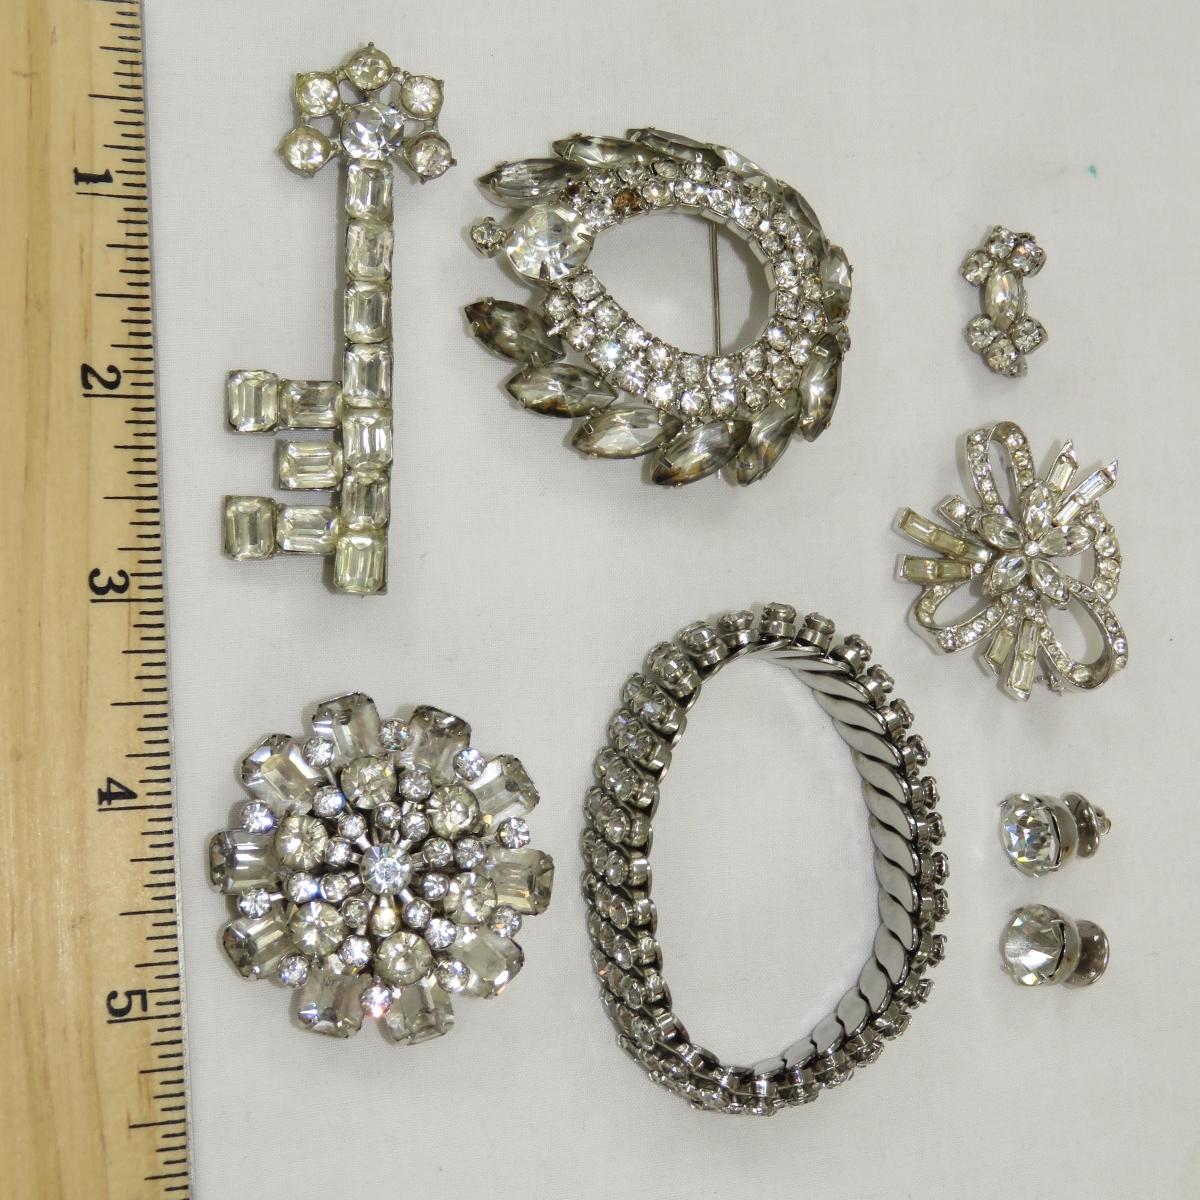 Vintage Rhinestone jewelry in Jewelry box